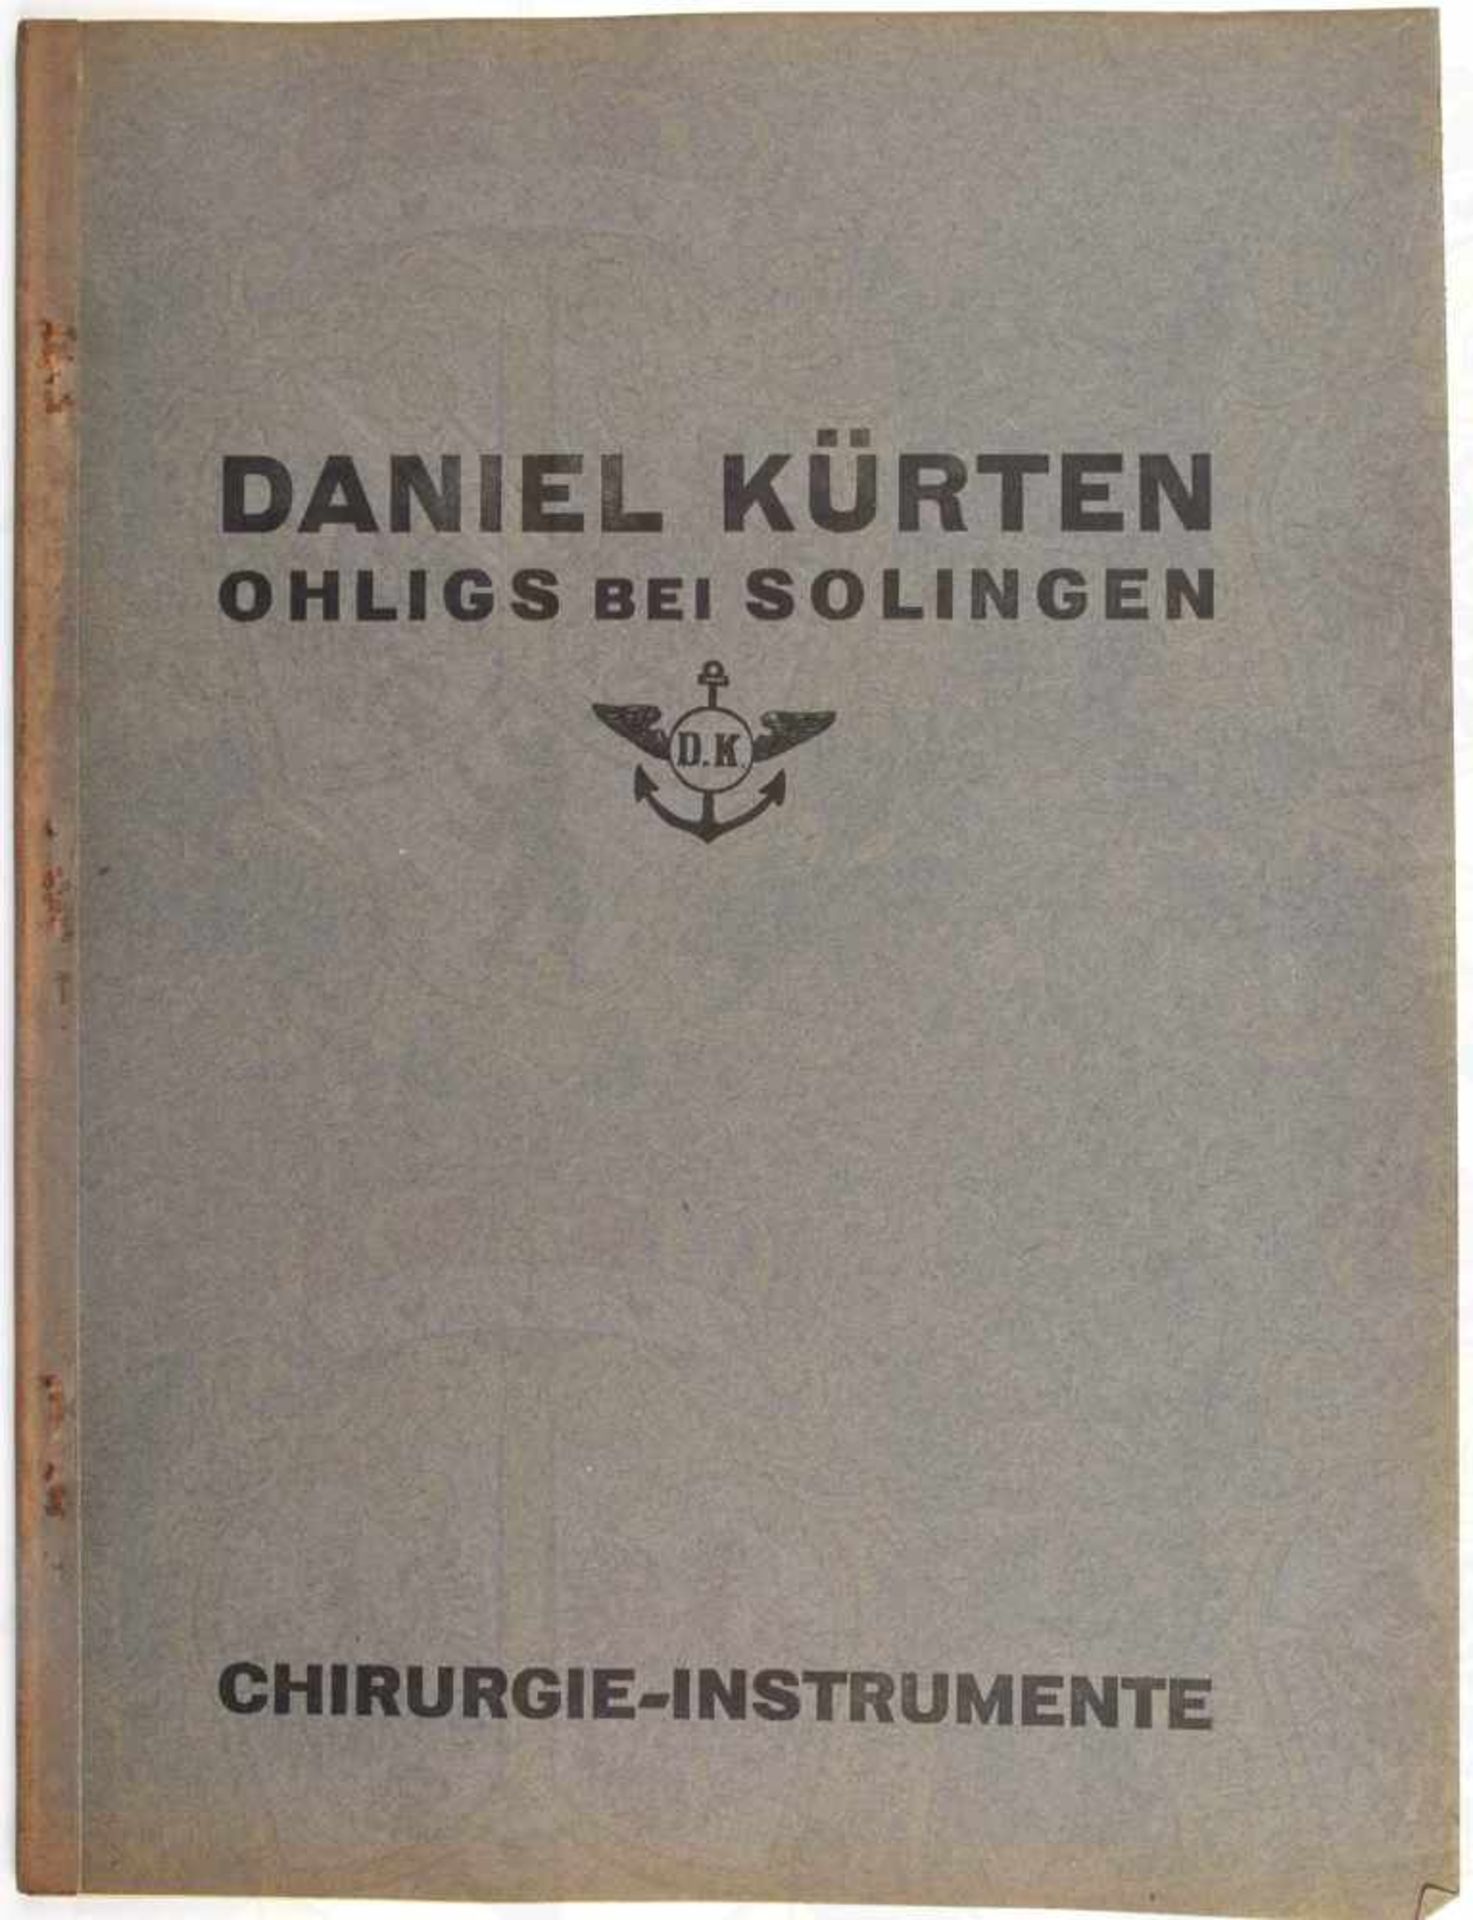 MUSTERKATALOG CHIRURGIE-INSTRUMENTE 1922, Daniel Kürten, Ohligs bei Solingen, durchgehend Abb., 96